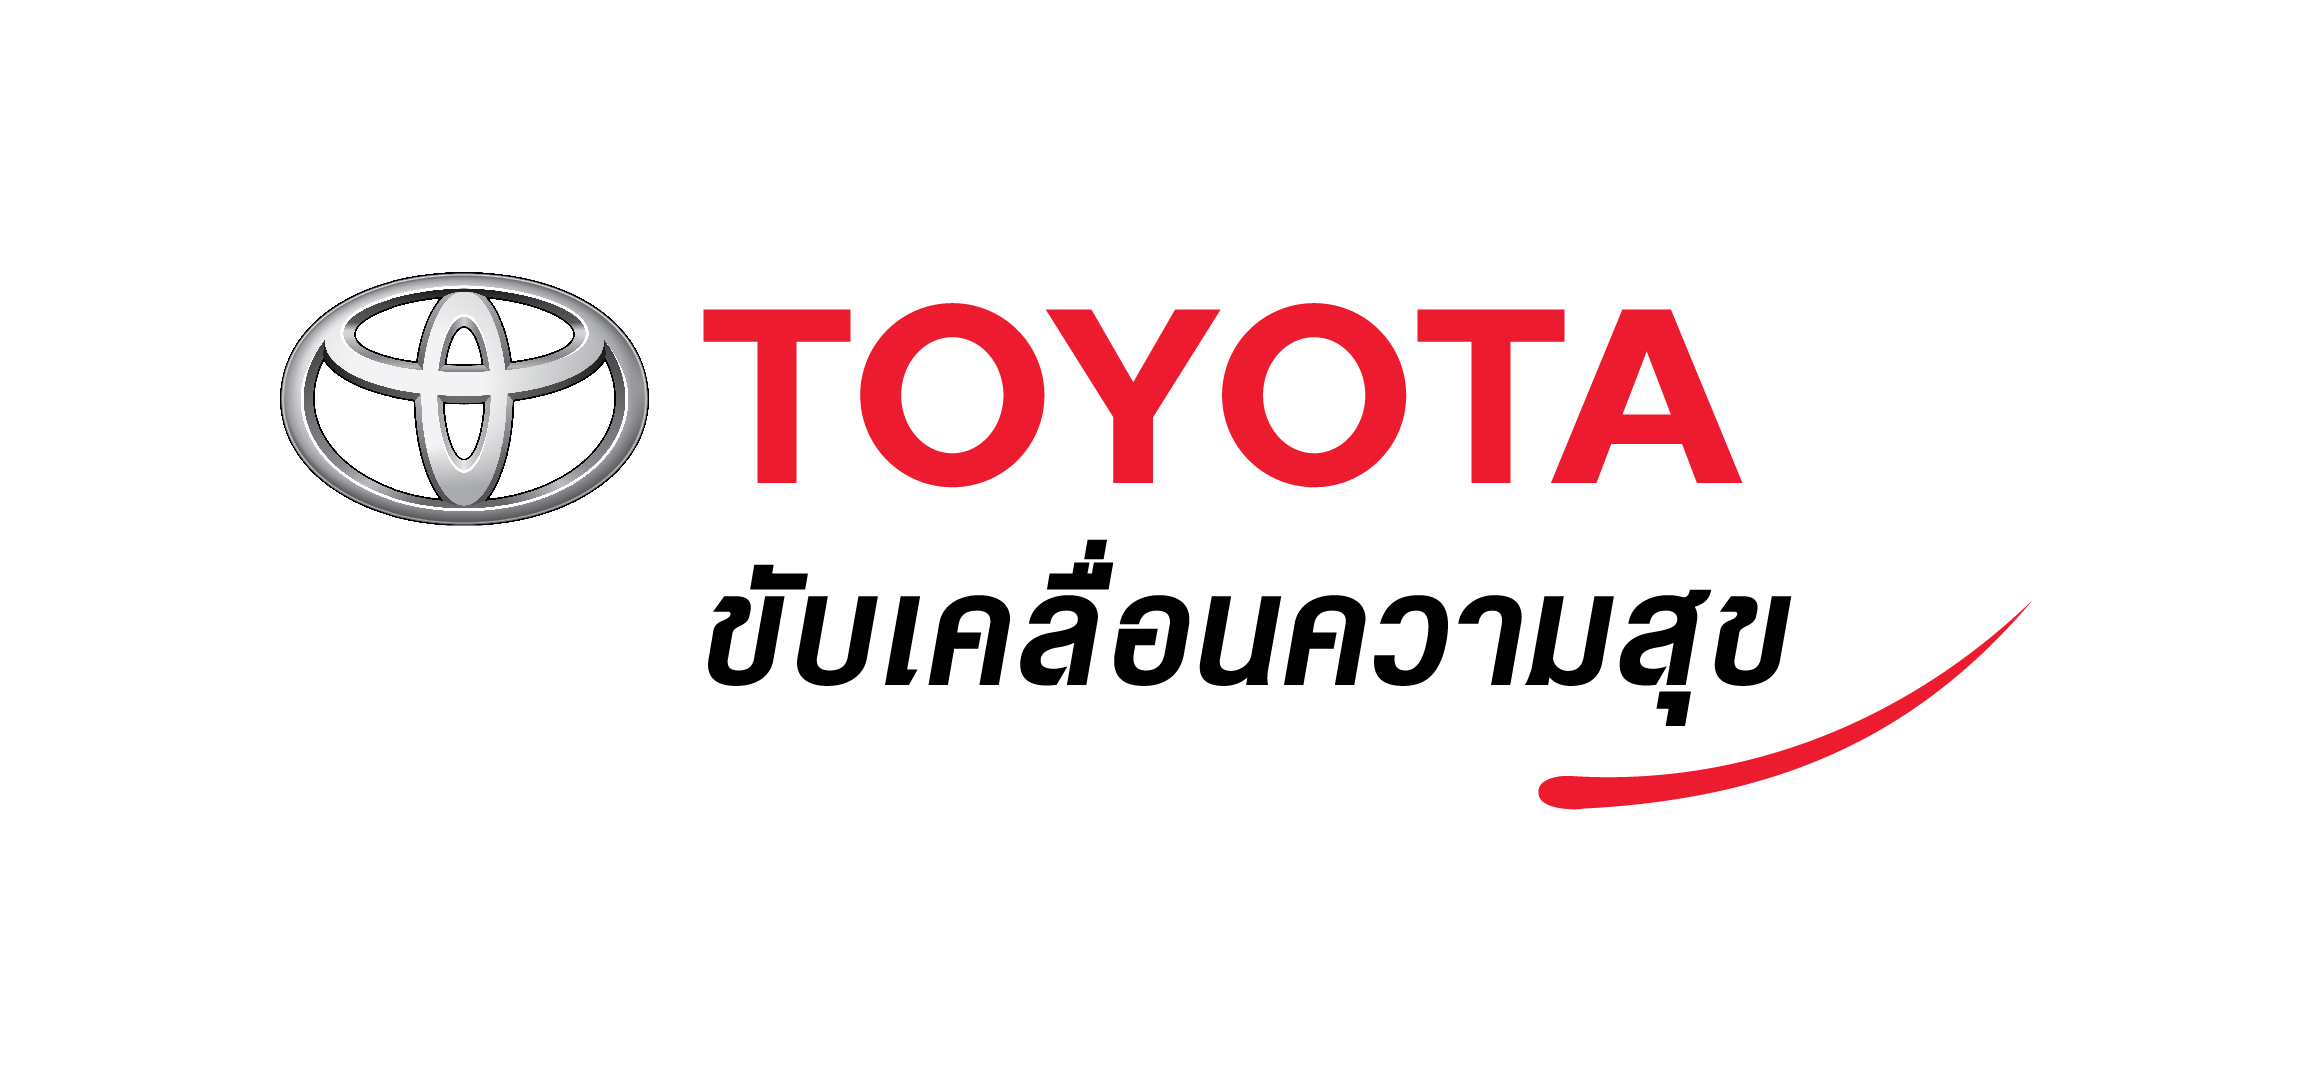  Toyota Motor Thailand Co., Ltd.